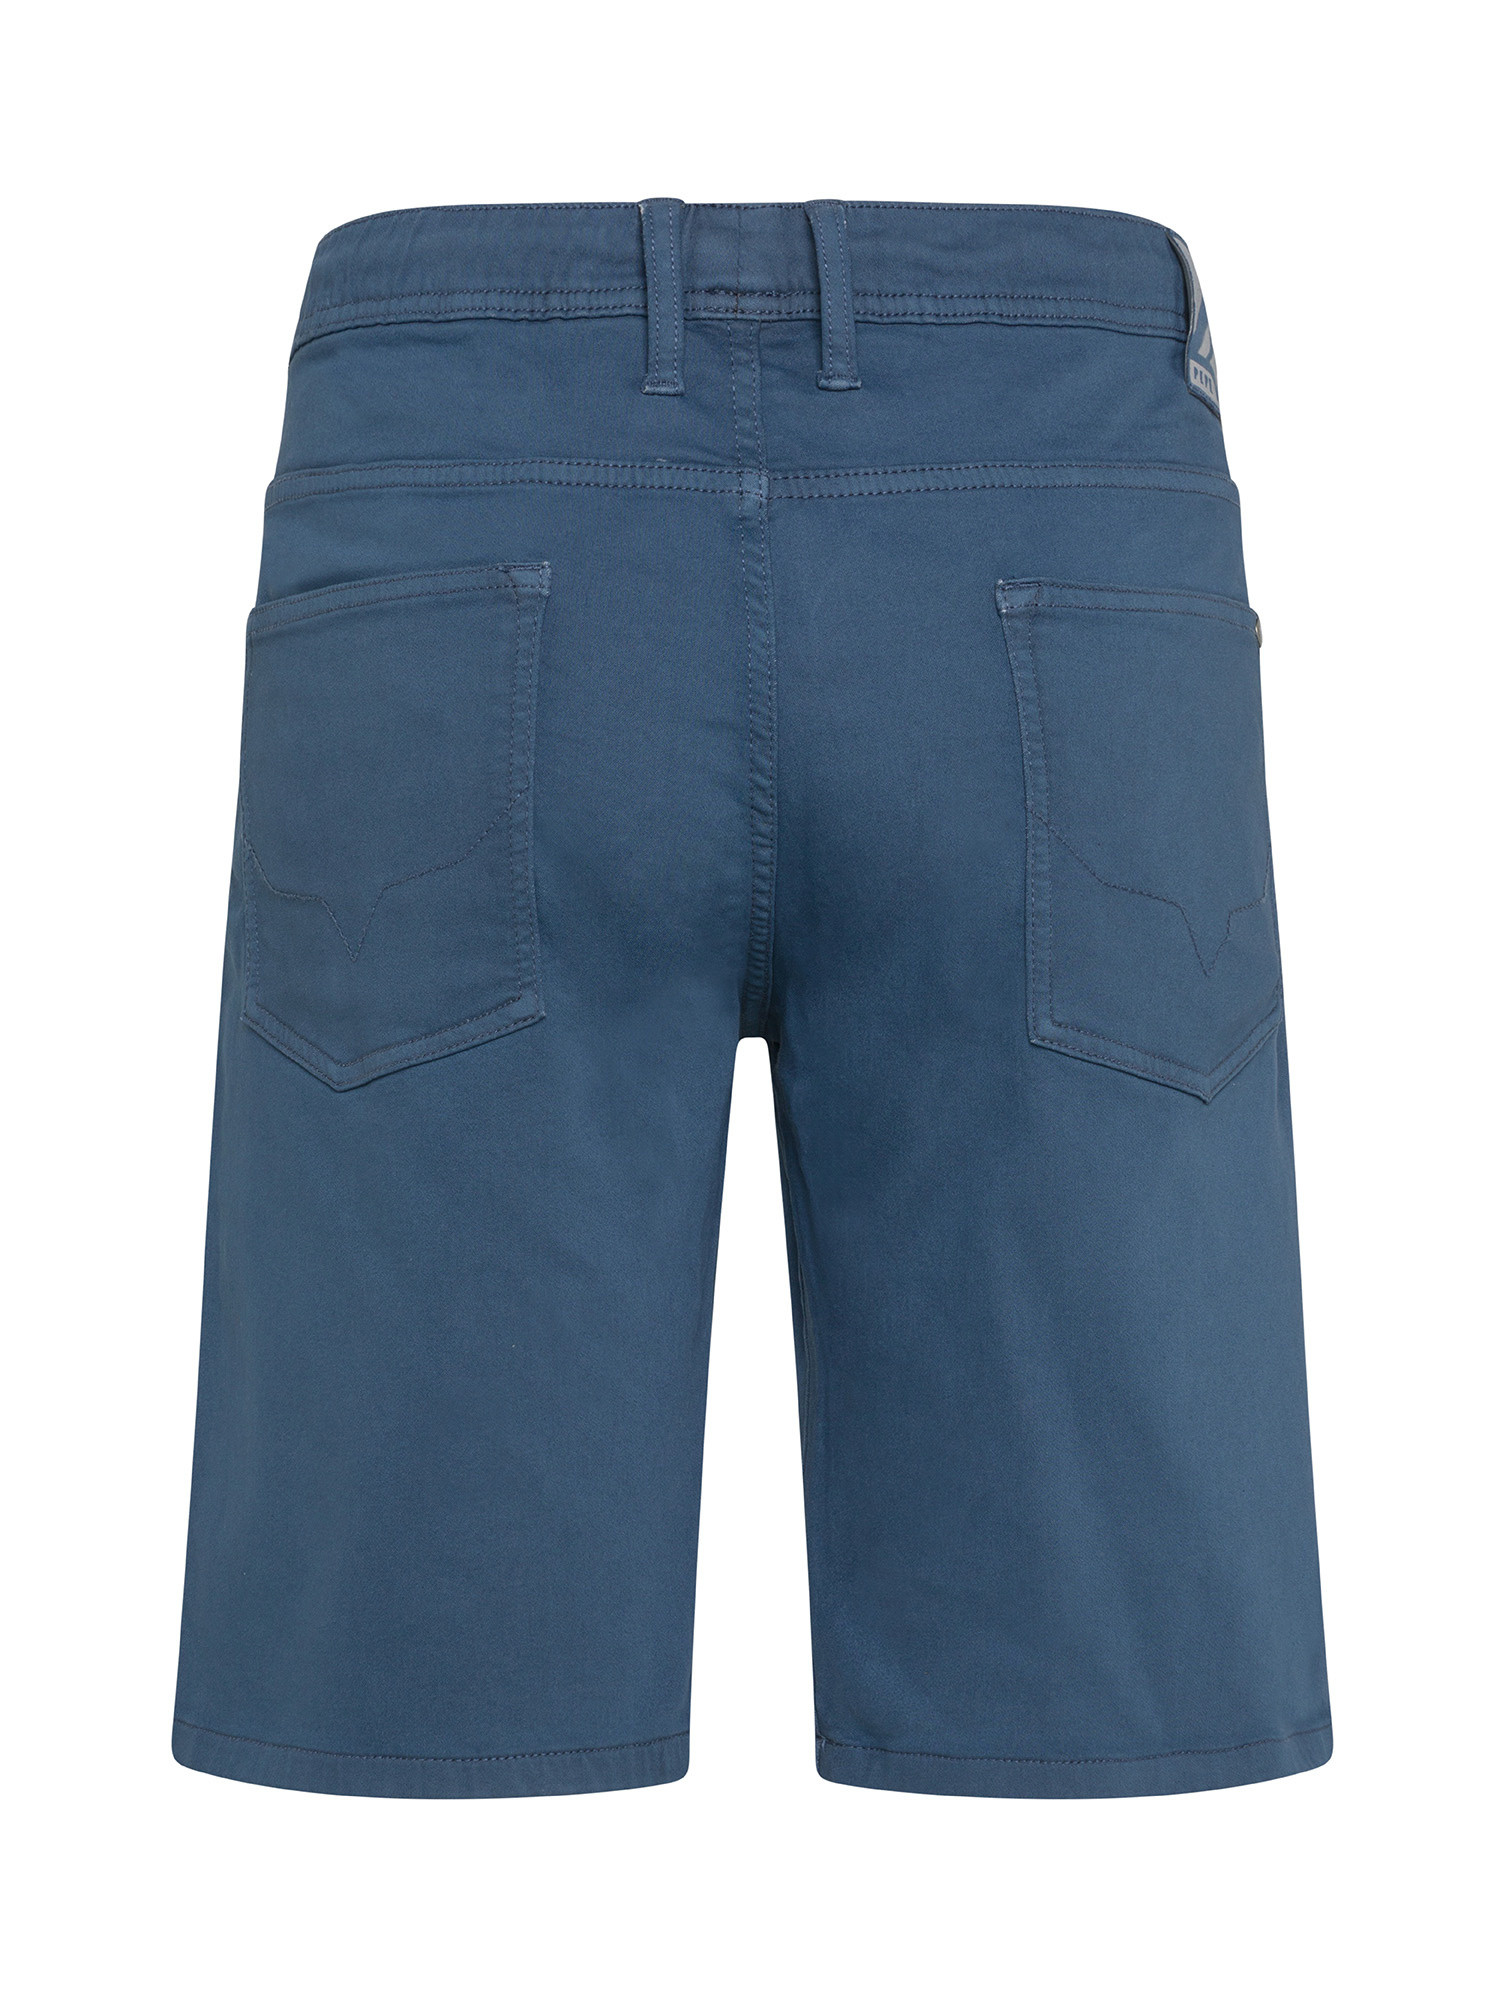 Pepe Jeans - Bermuda cinque tasche slim fit, Denim, large image number 1